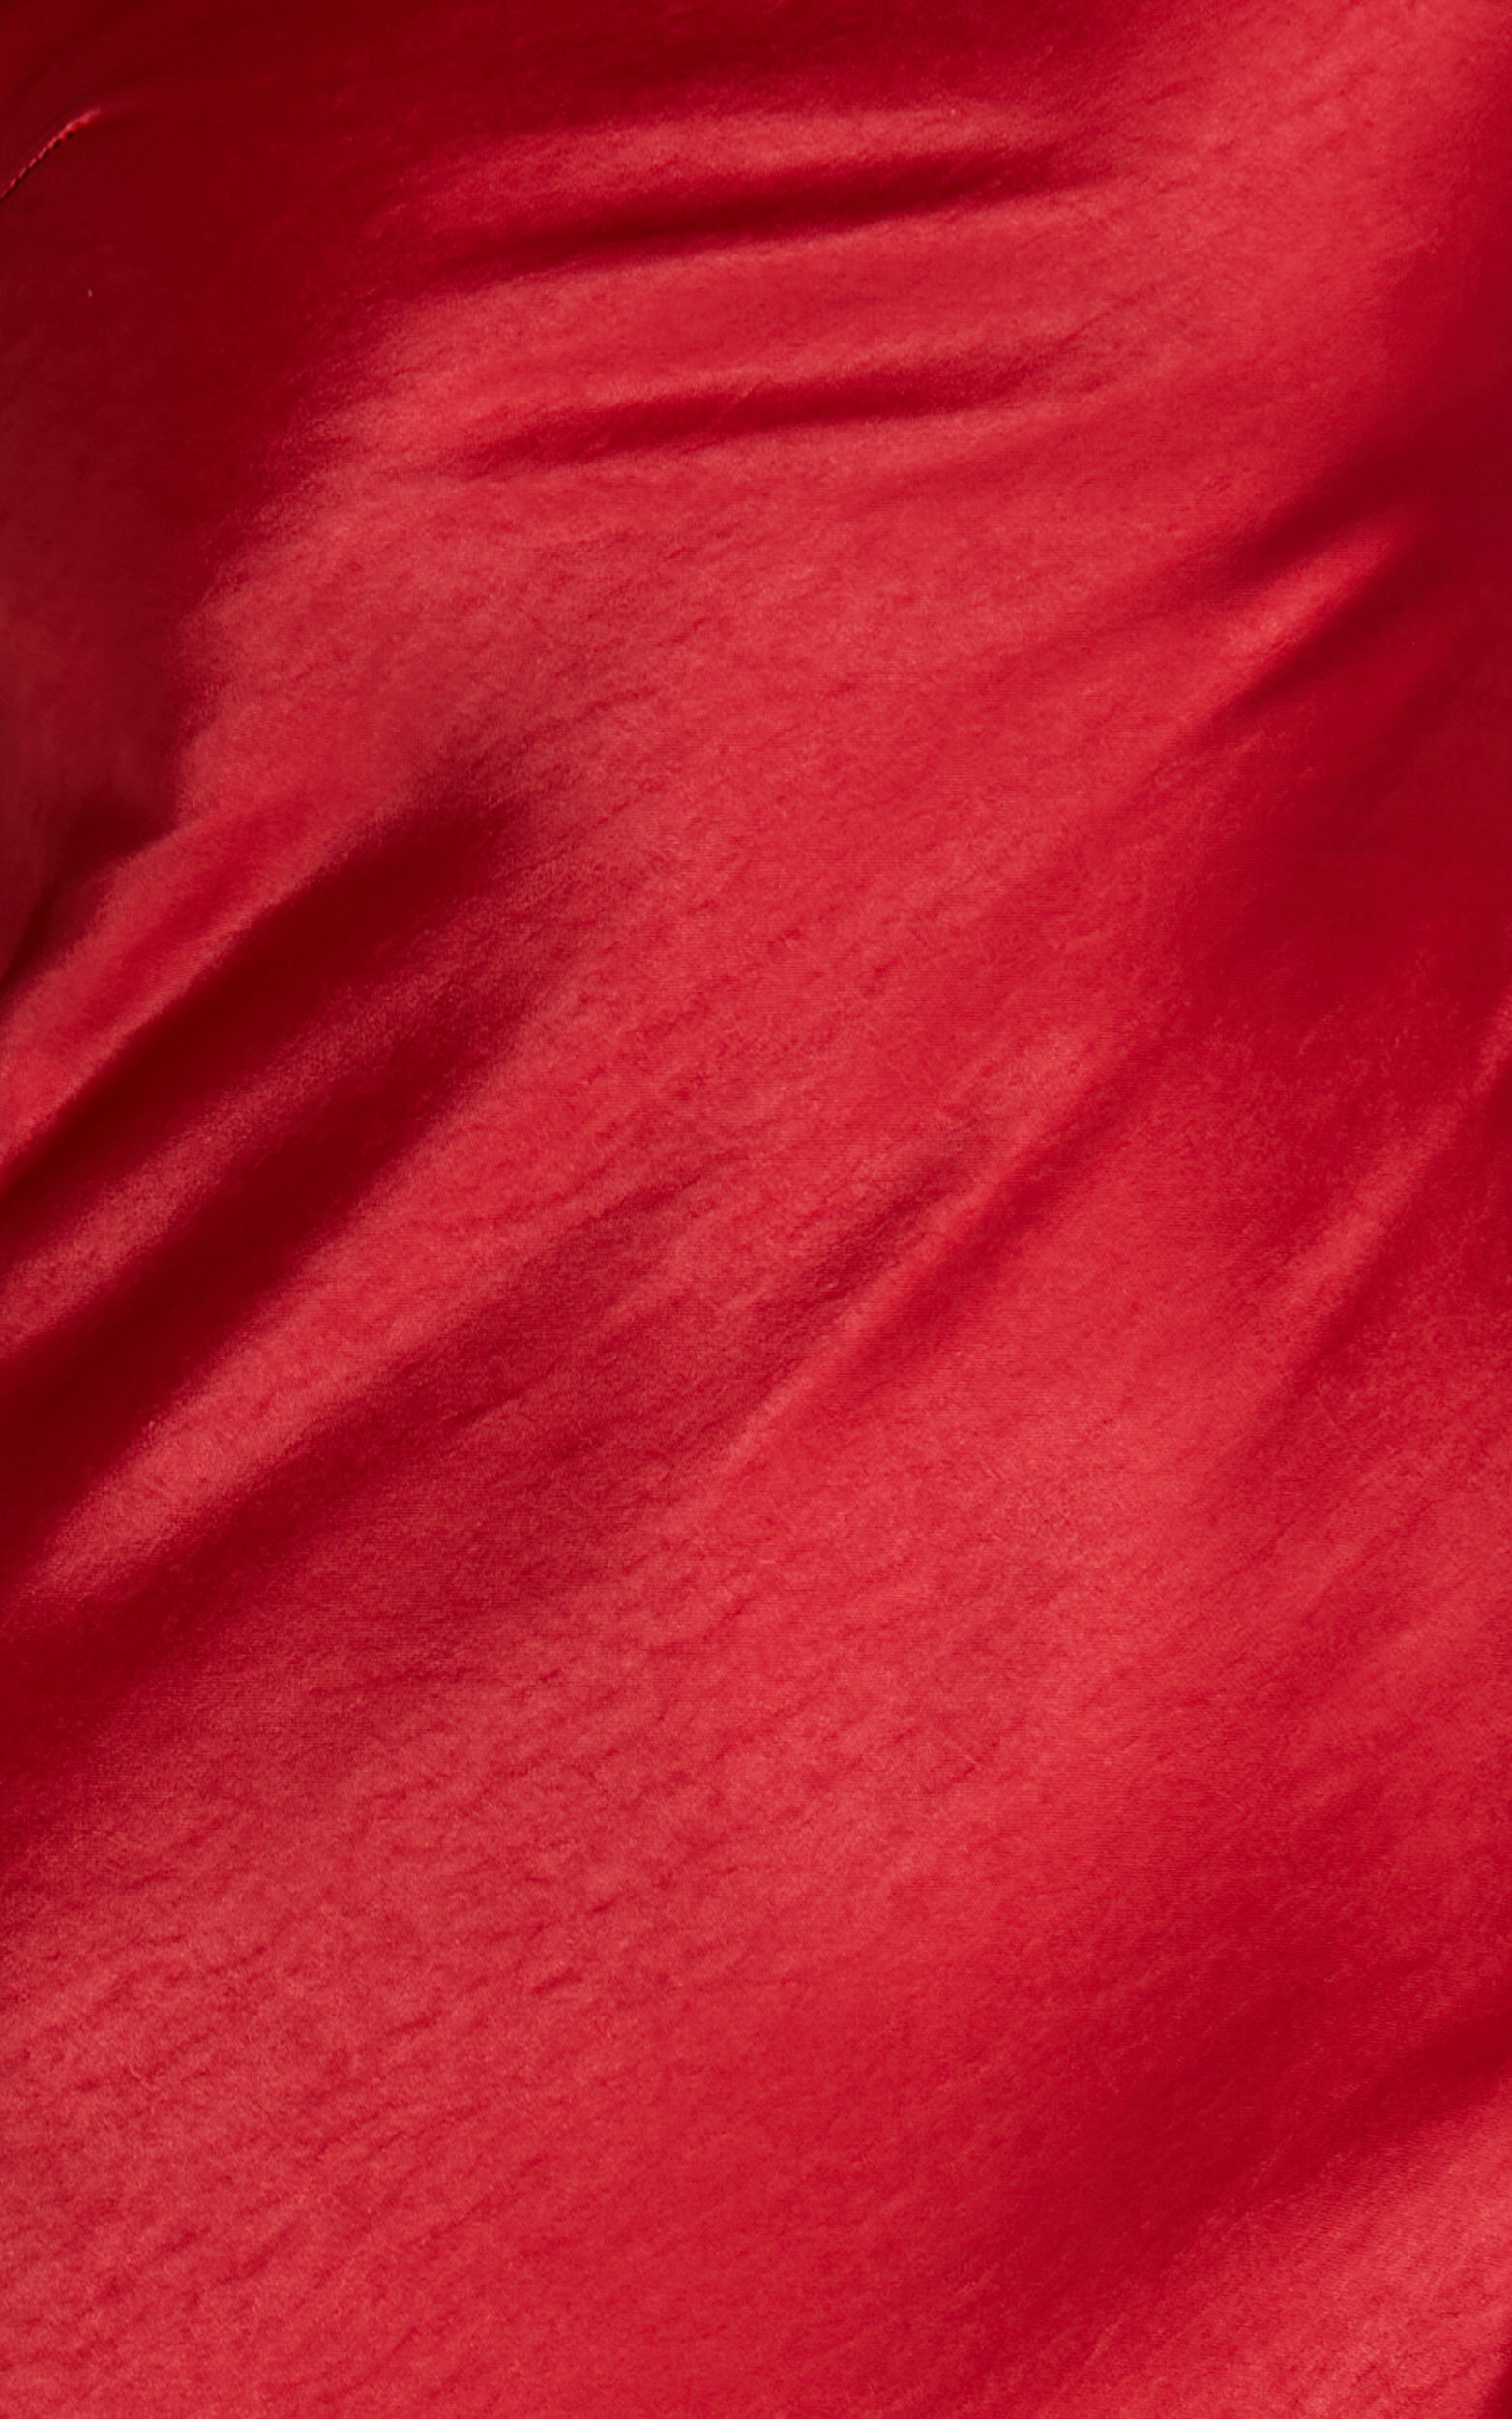 Charlita Maxi Dress - Strapless Cowl Back Satin Dress in Cherry Red